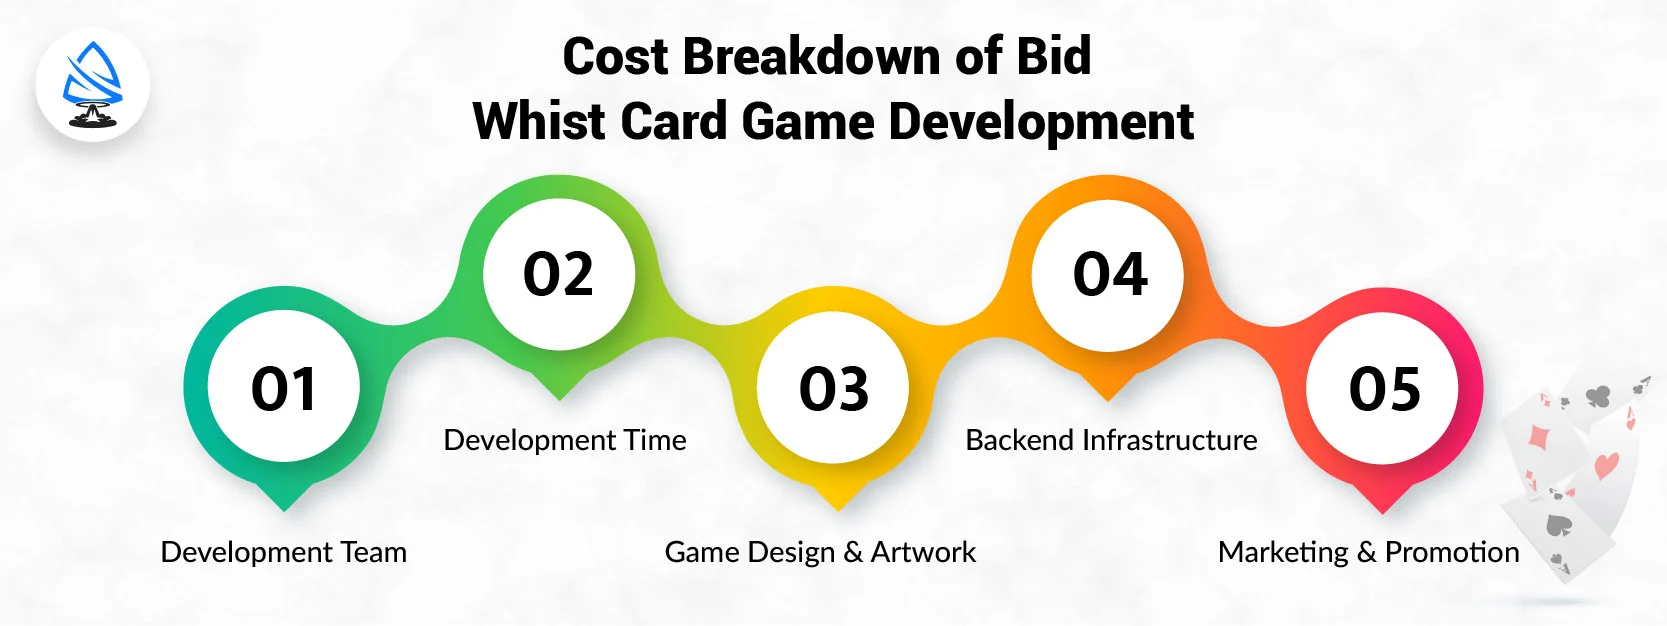 Cost Breakdown of Bid Whist Card Game Development